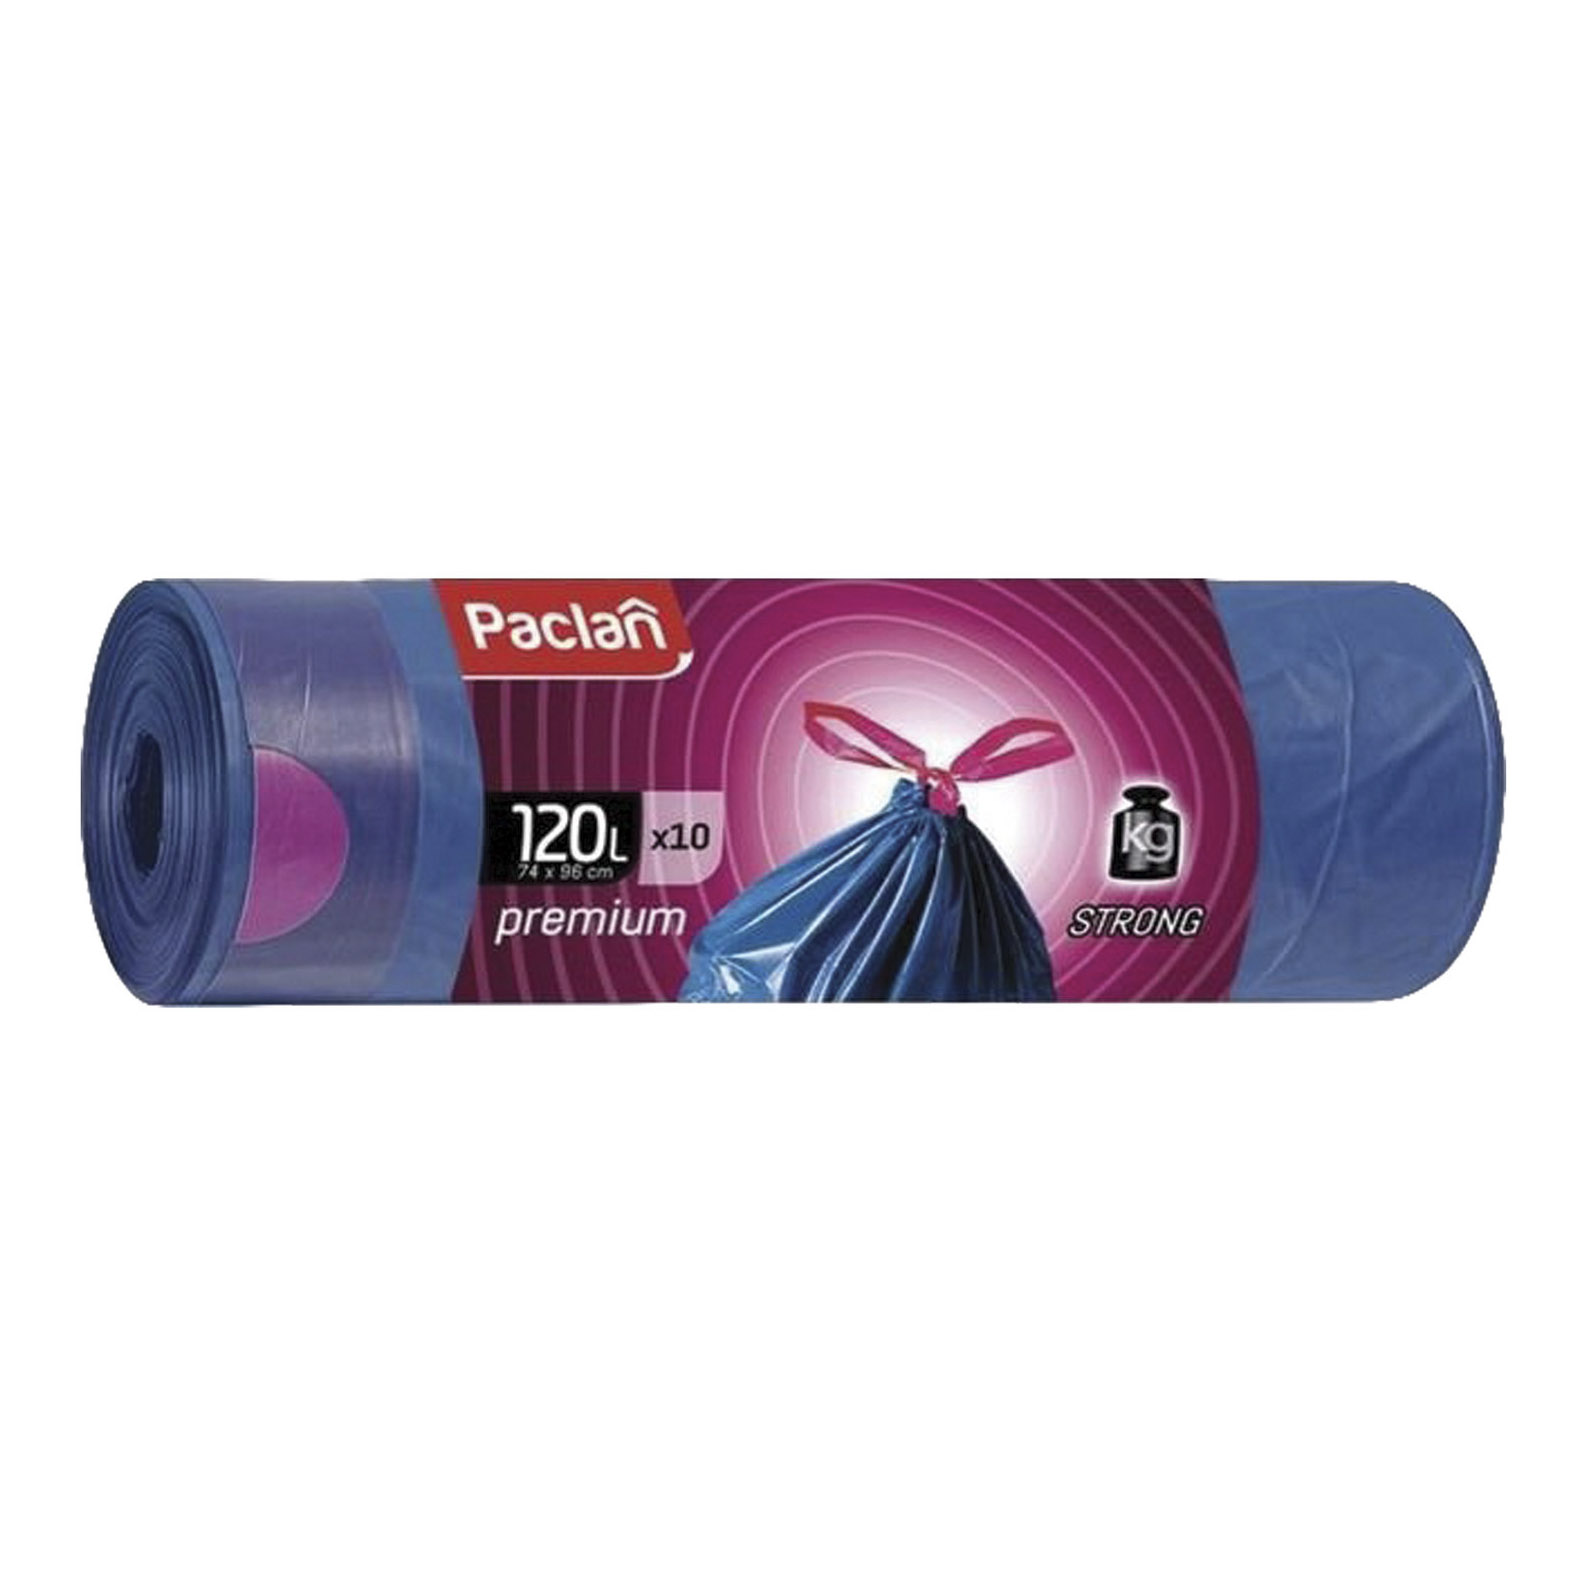 Мешки для мусора Paclan Premium с завязками 120 л 10 шт мешки для мусора paclan premium с завязками 60 литров 10 шт